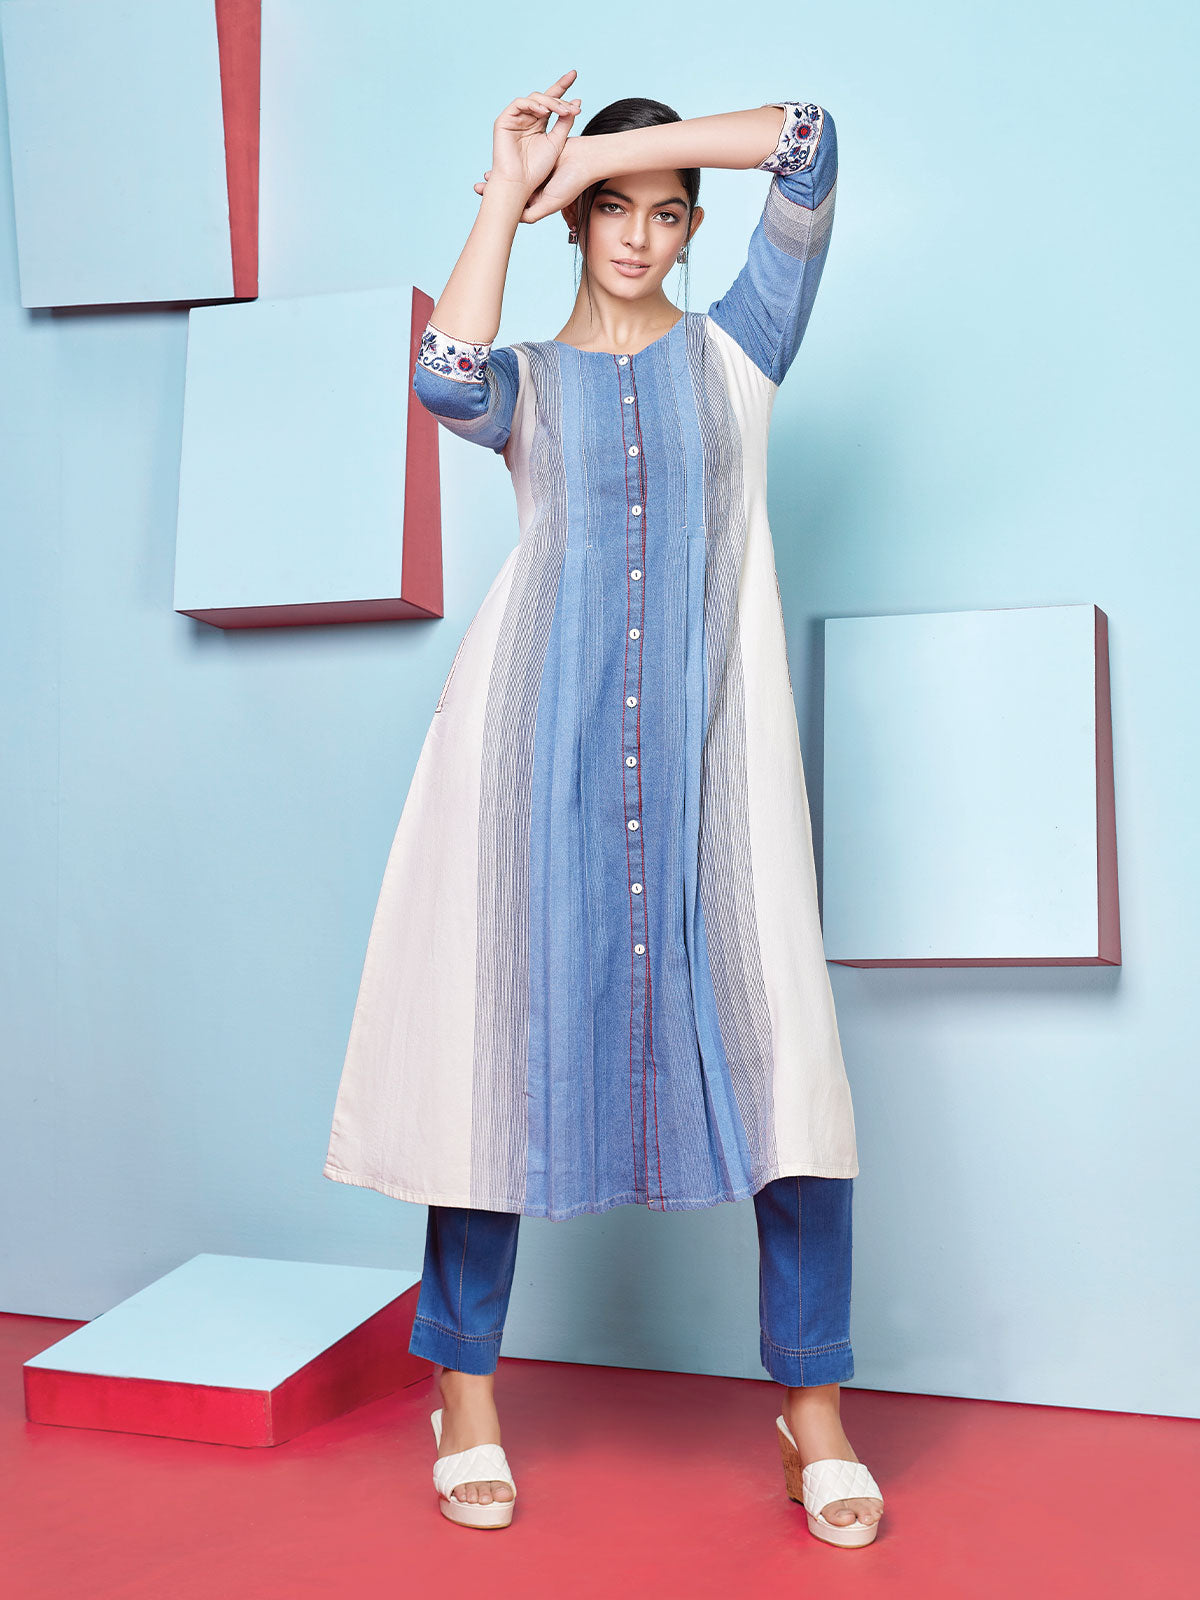 Buy Zainab CREATIOND Denim Tunic Dress for Girls & Woman/Denim Cotton  (Large) at Amazon.in